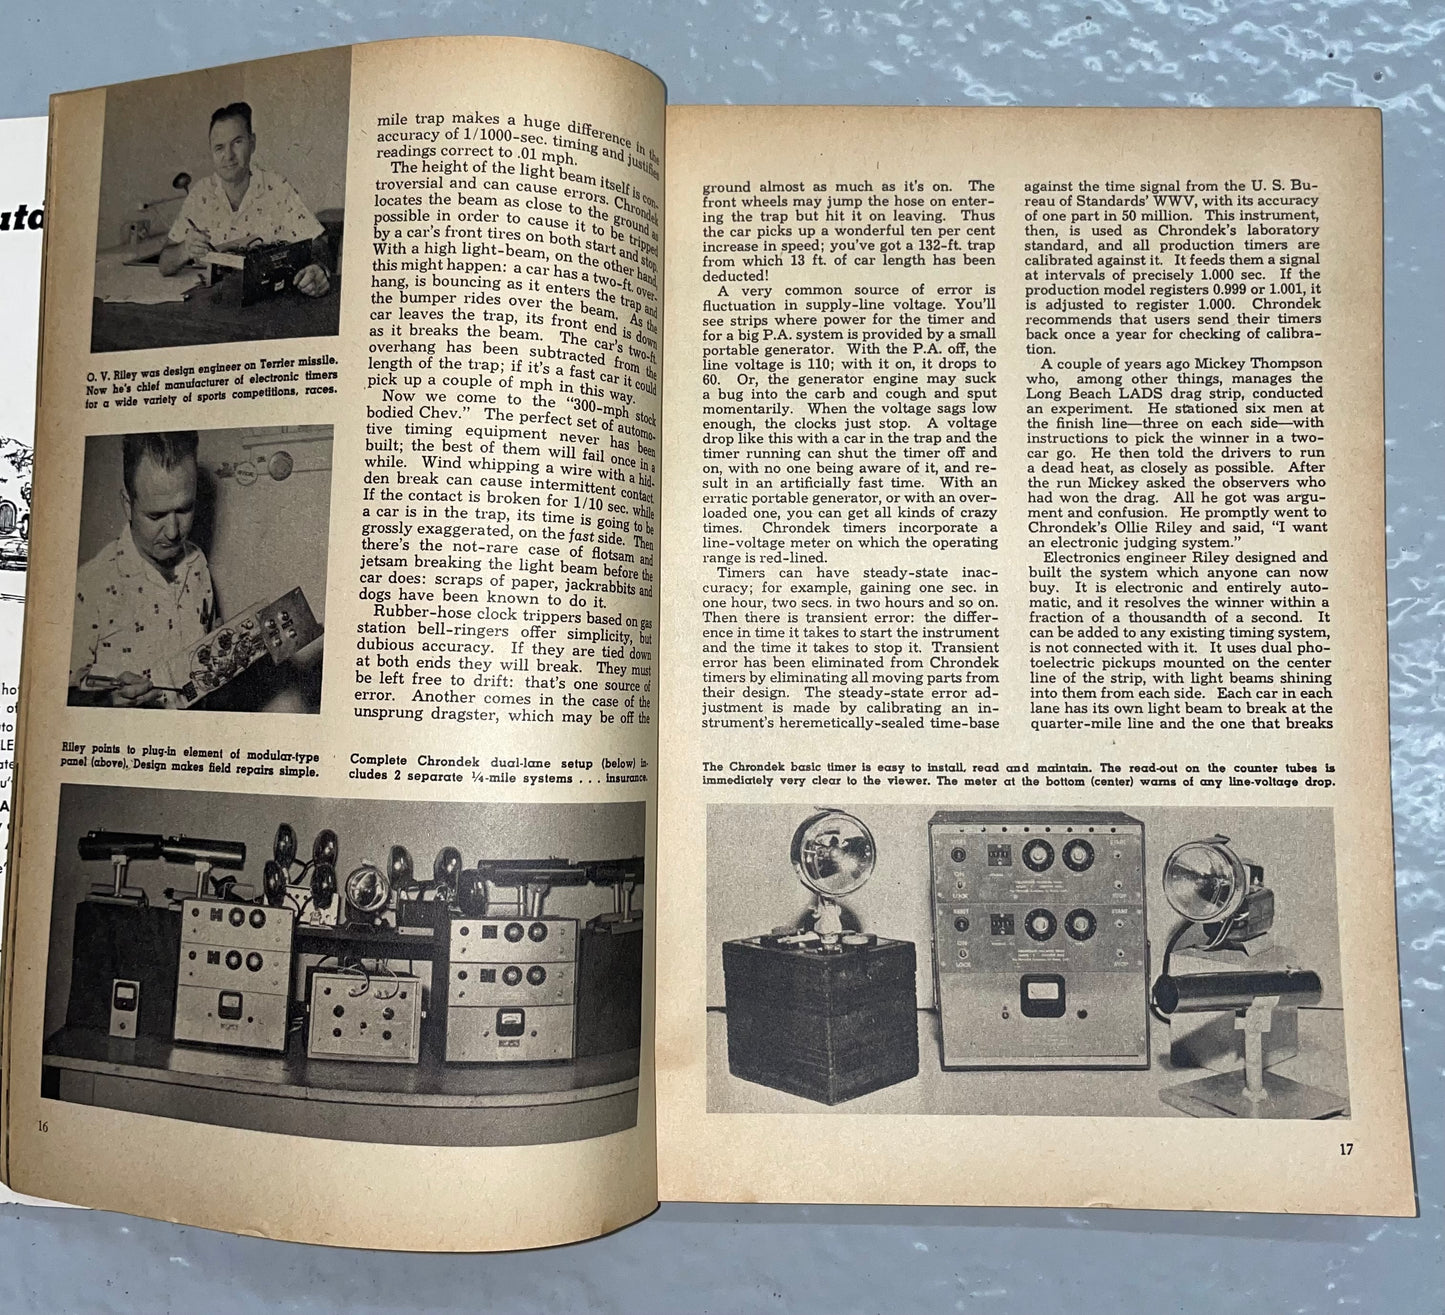 1959-1961 Hot Rod Books